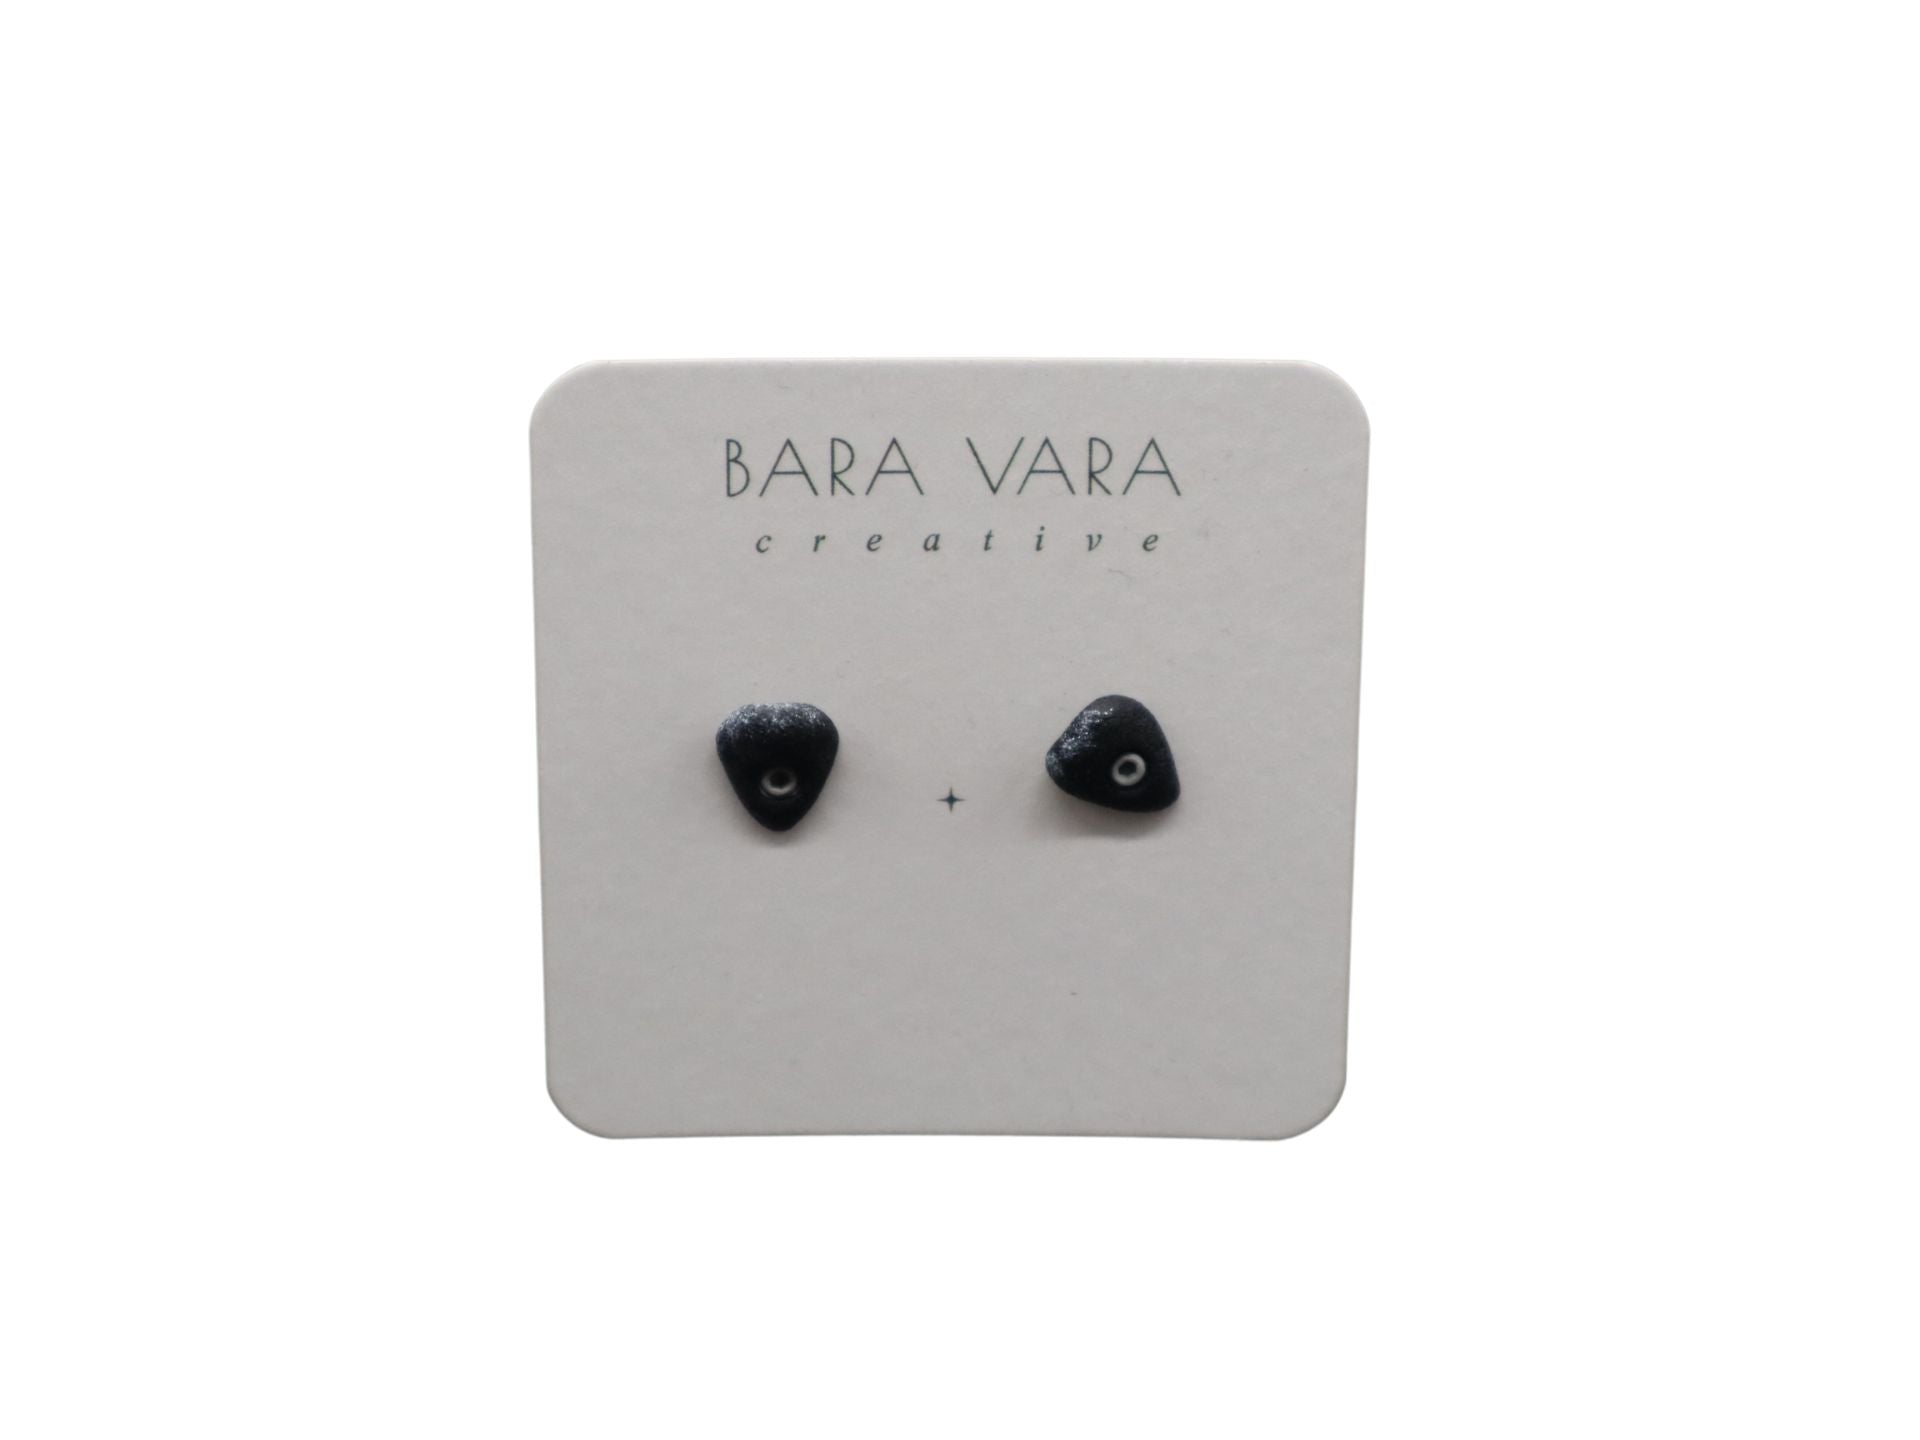 Bara Vara Creative Earrings - Black Jug - Happy Biner